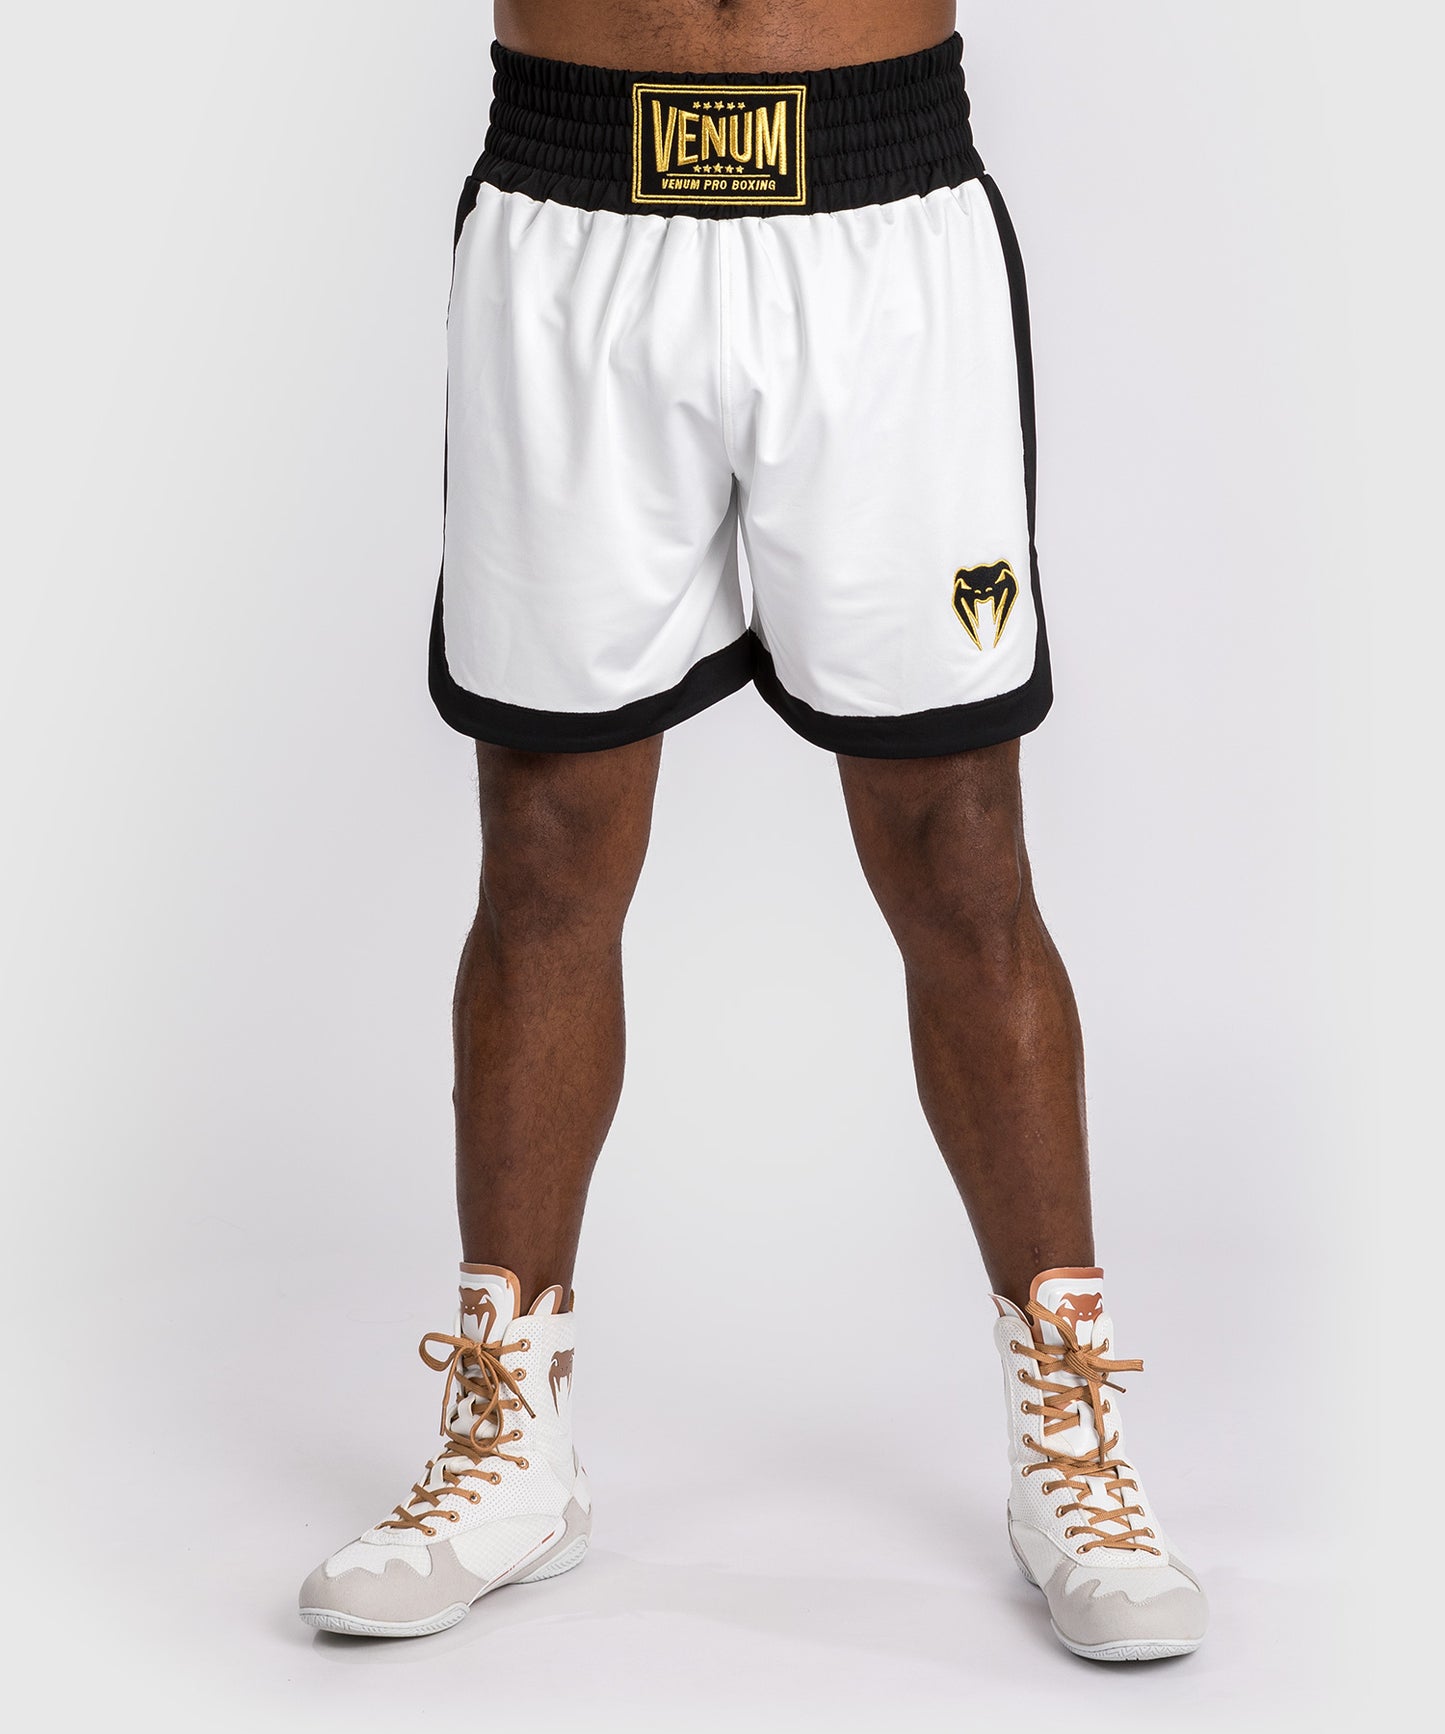 Venum Classic Boxing Shorts - White/Black